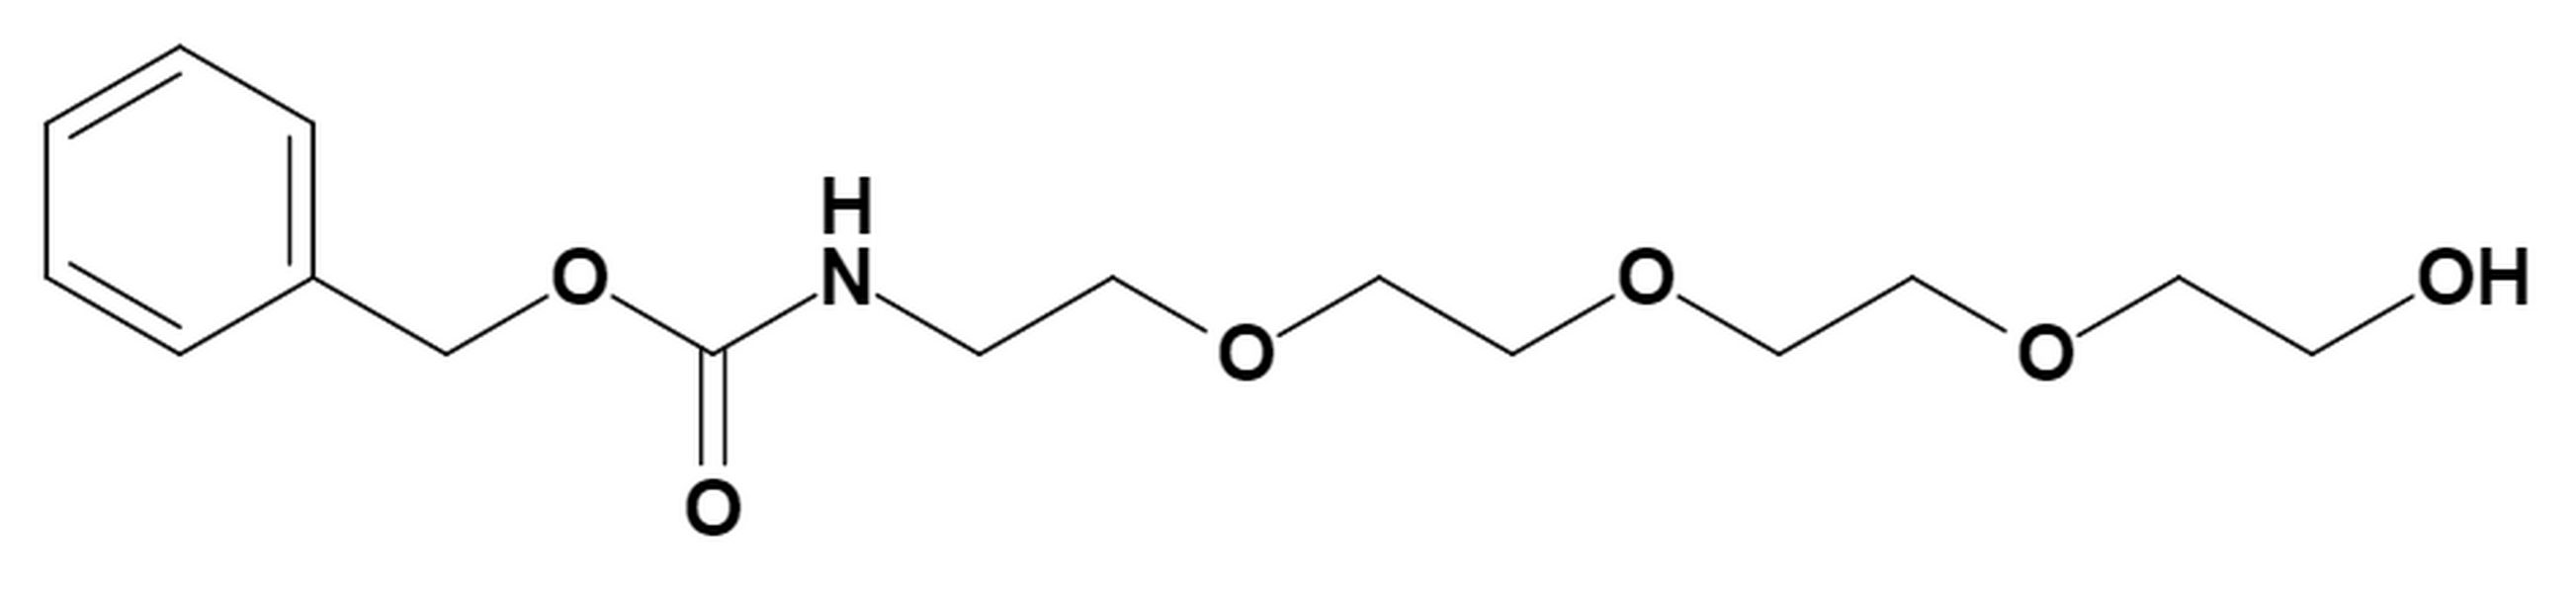 Cbz-N-amido-PEG4-alcohol